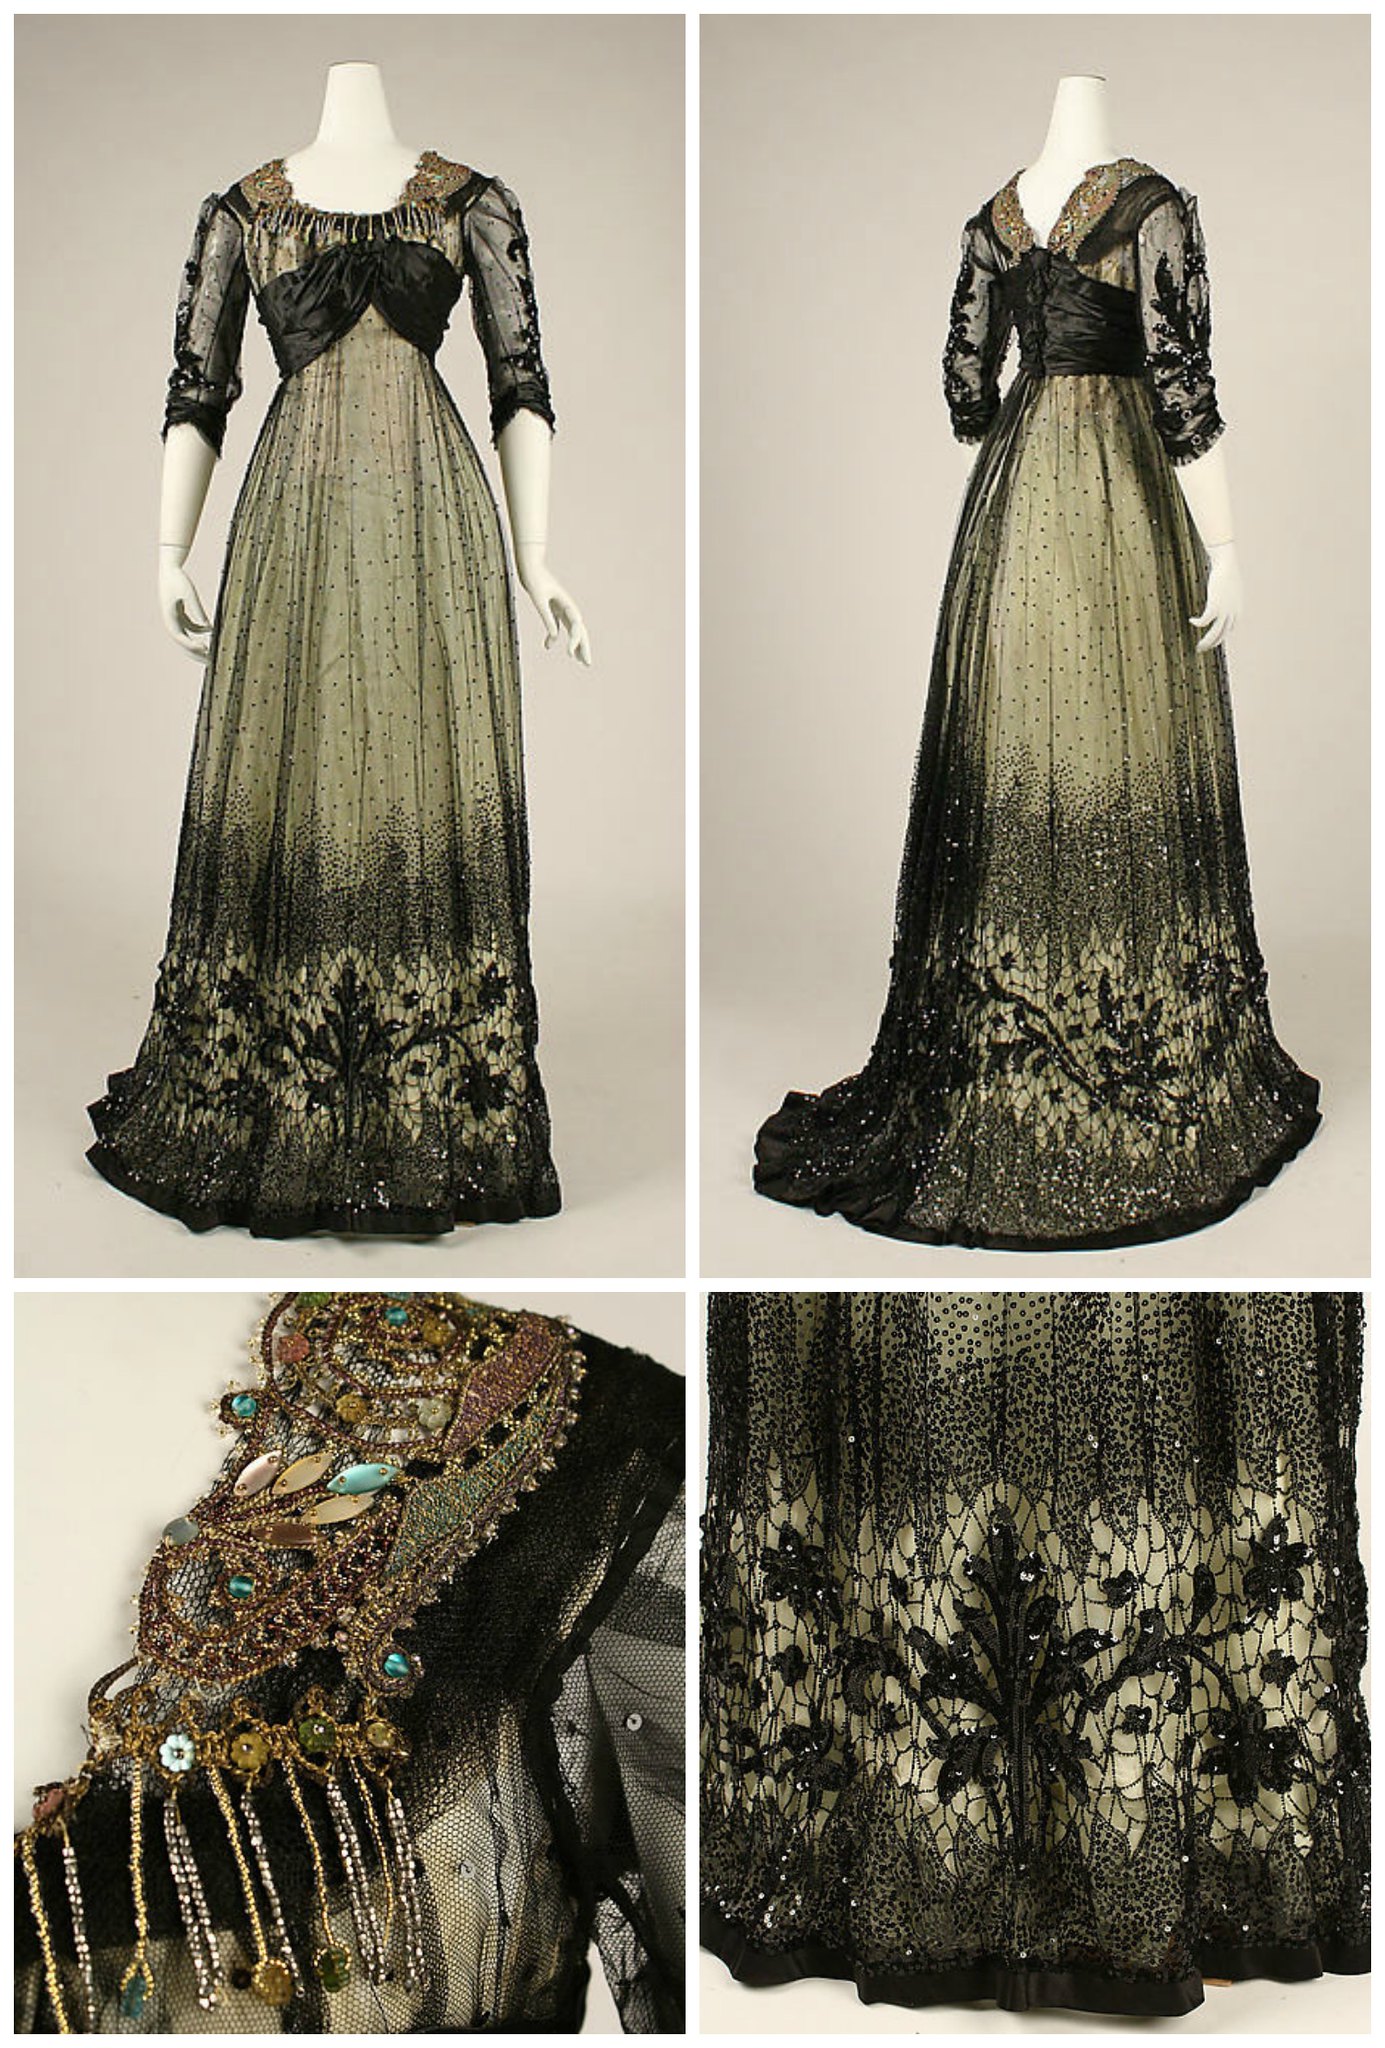 1908 Ball gown. American. Silk, cotton, glass, metallic thread. metmuseum